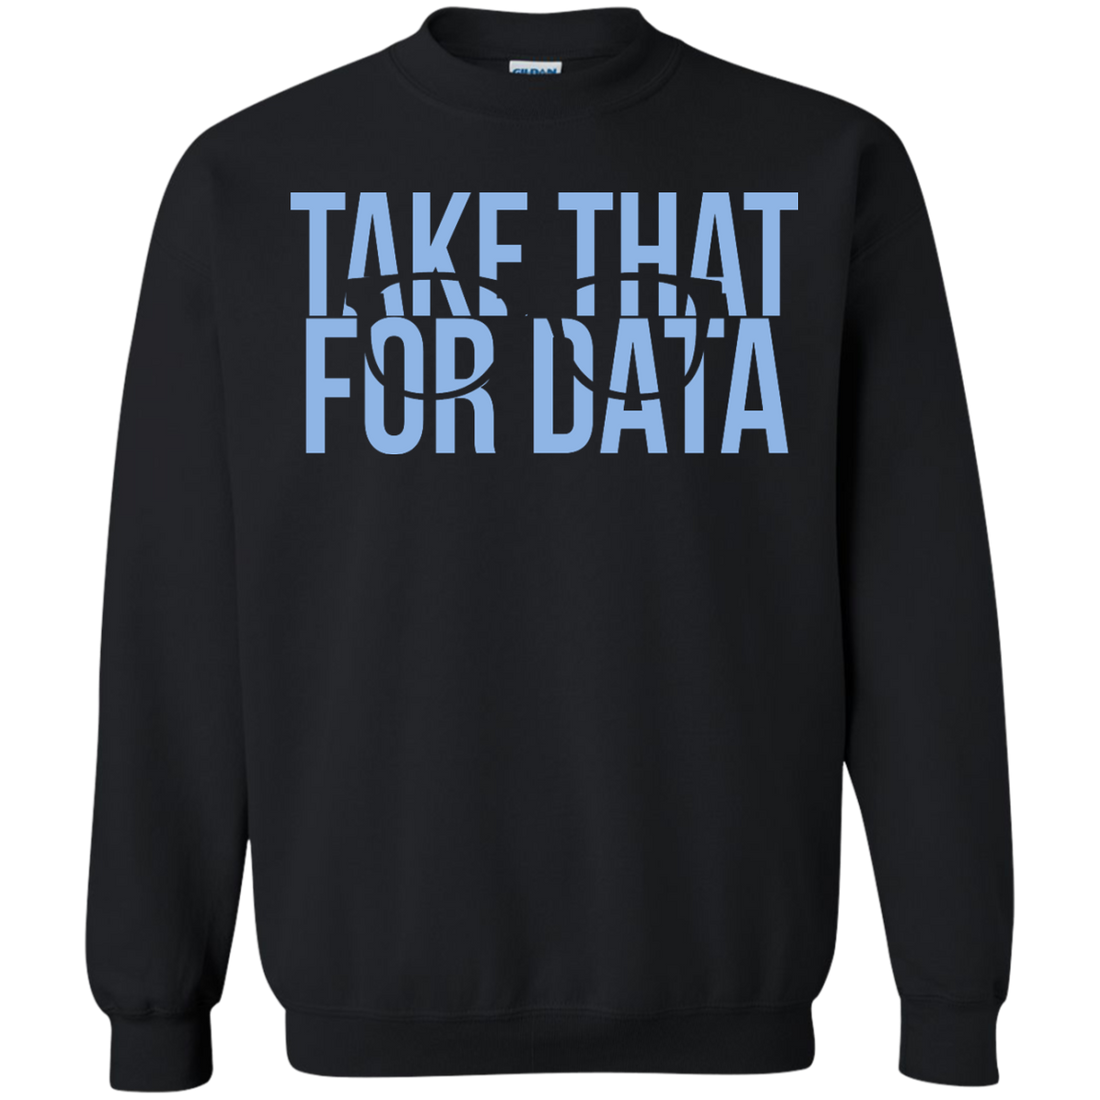 Take That For Data shirt David Fizdale